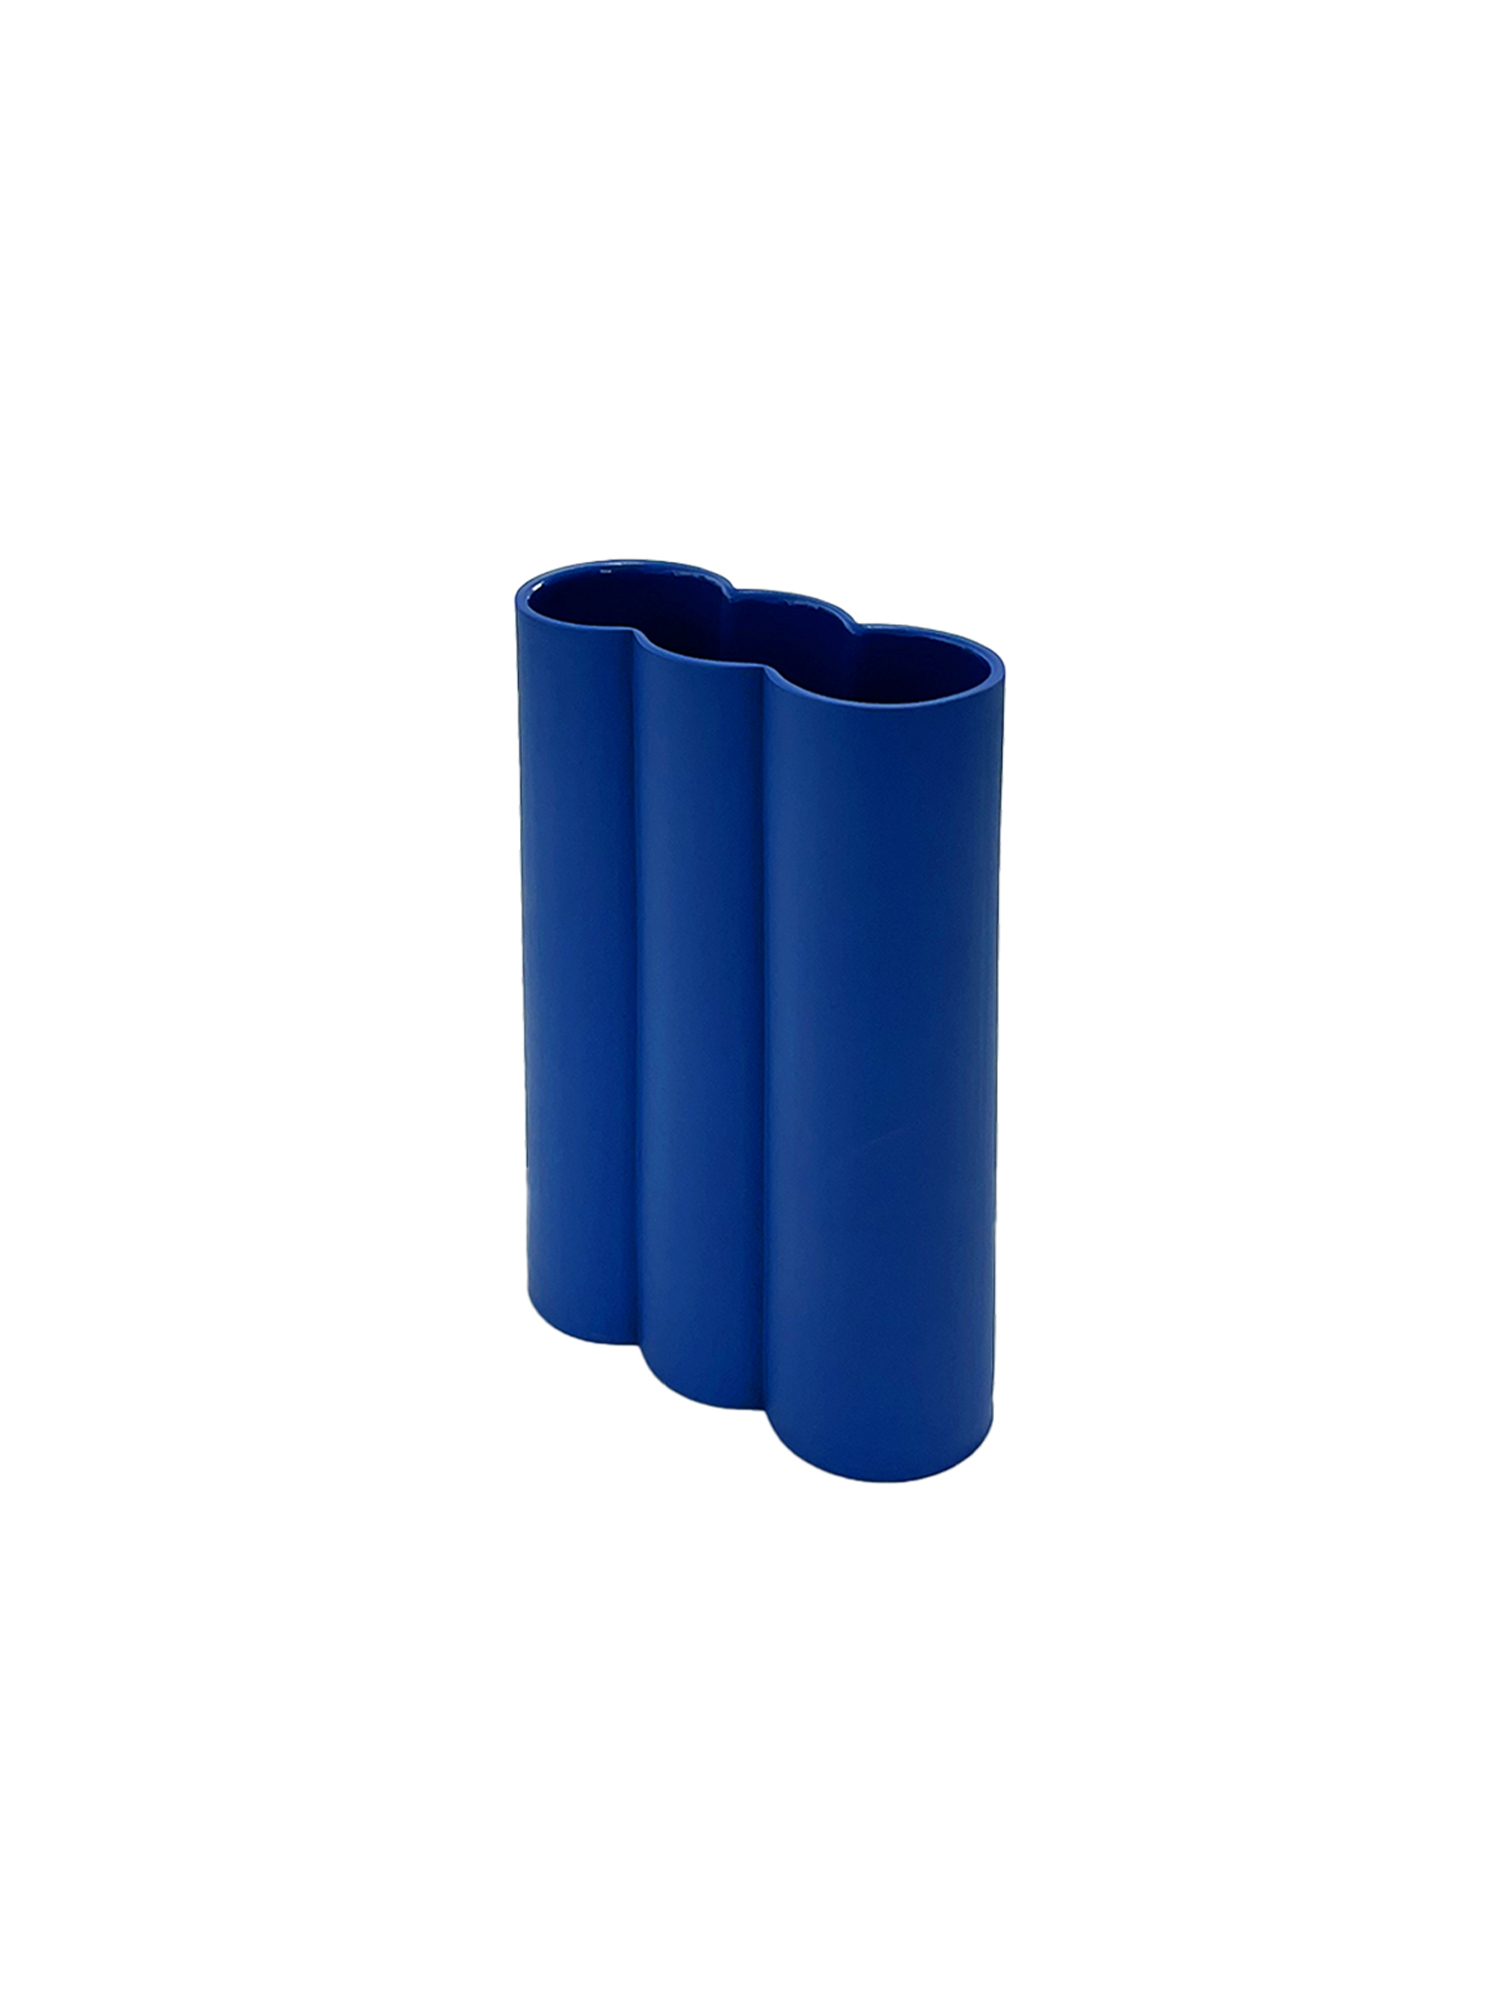 Intersection Vase - Deep Blue